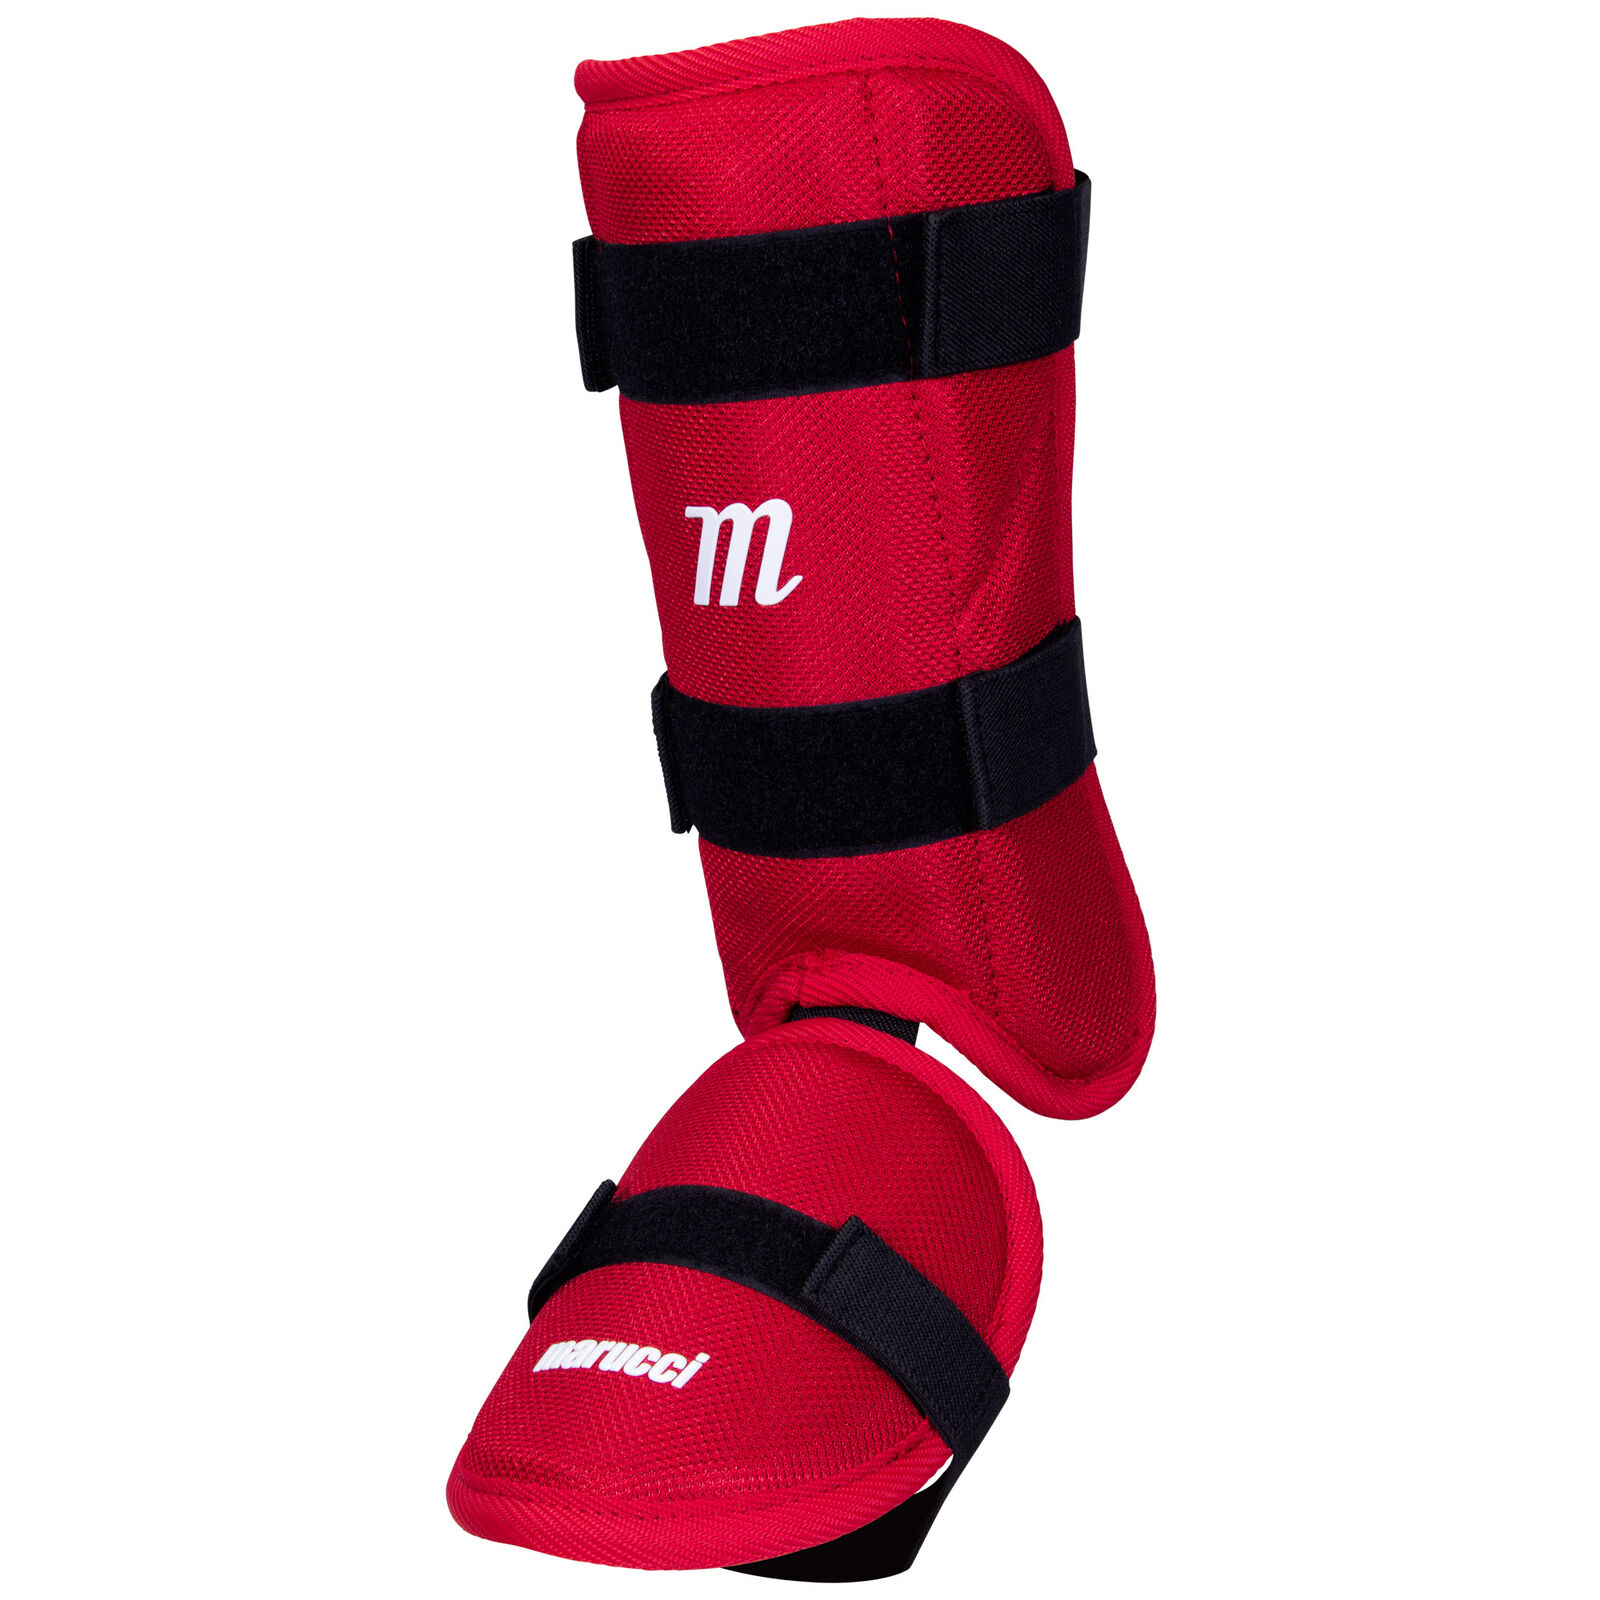 Marucci Adult Baseball/softball Batters Leg Guard - Red